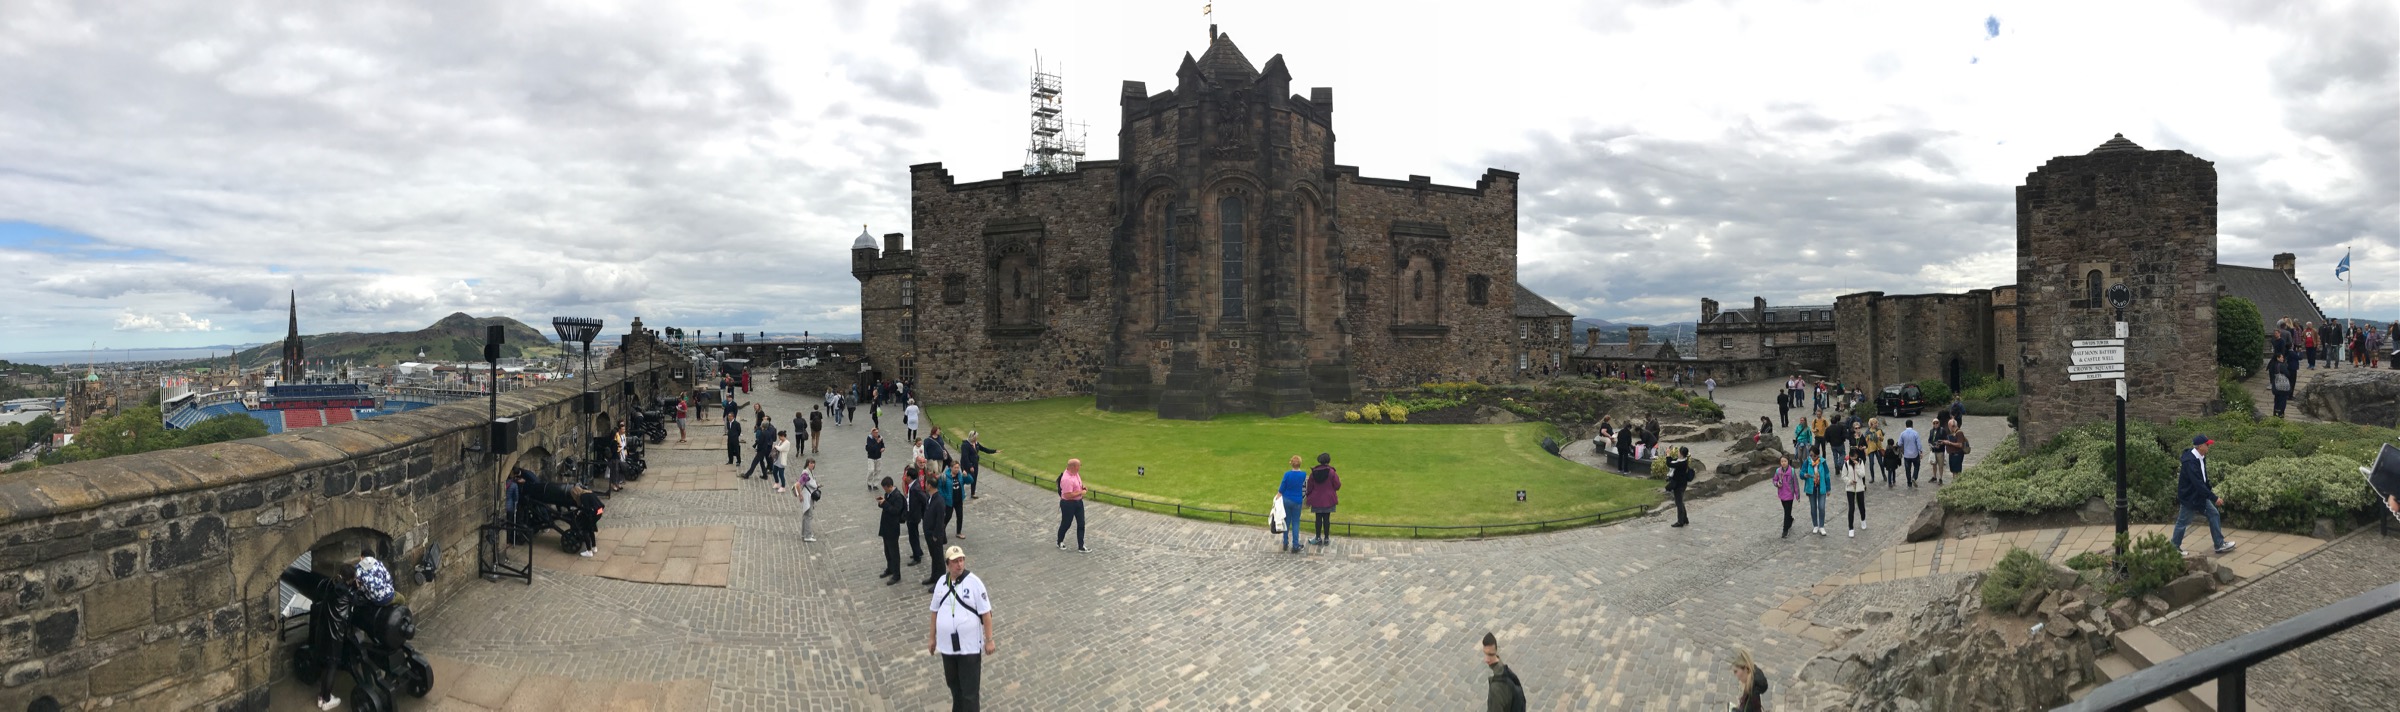 The inside of Edinburgh Castle.